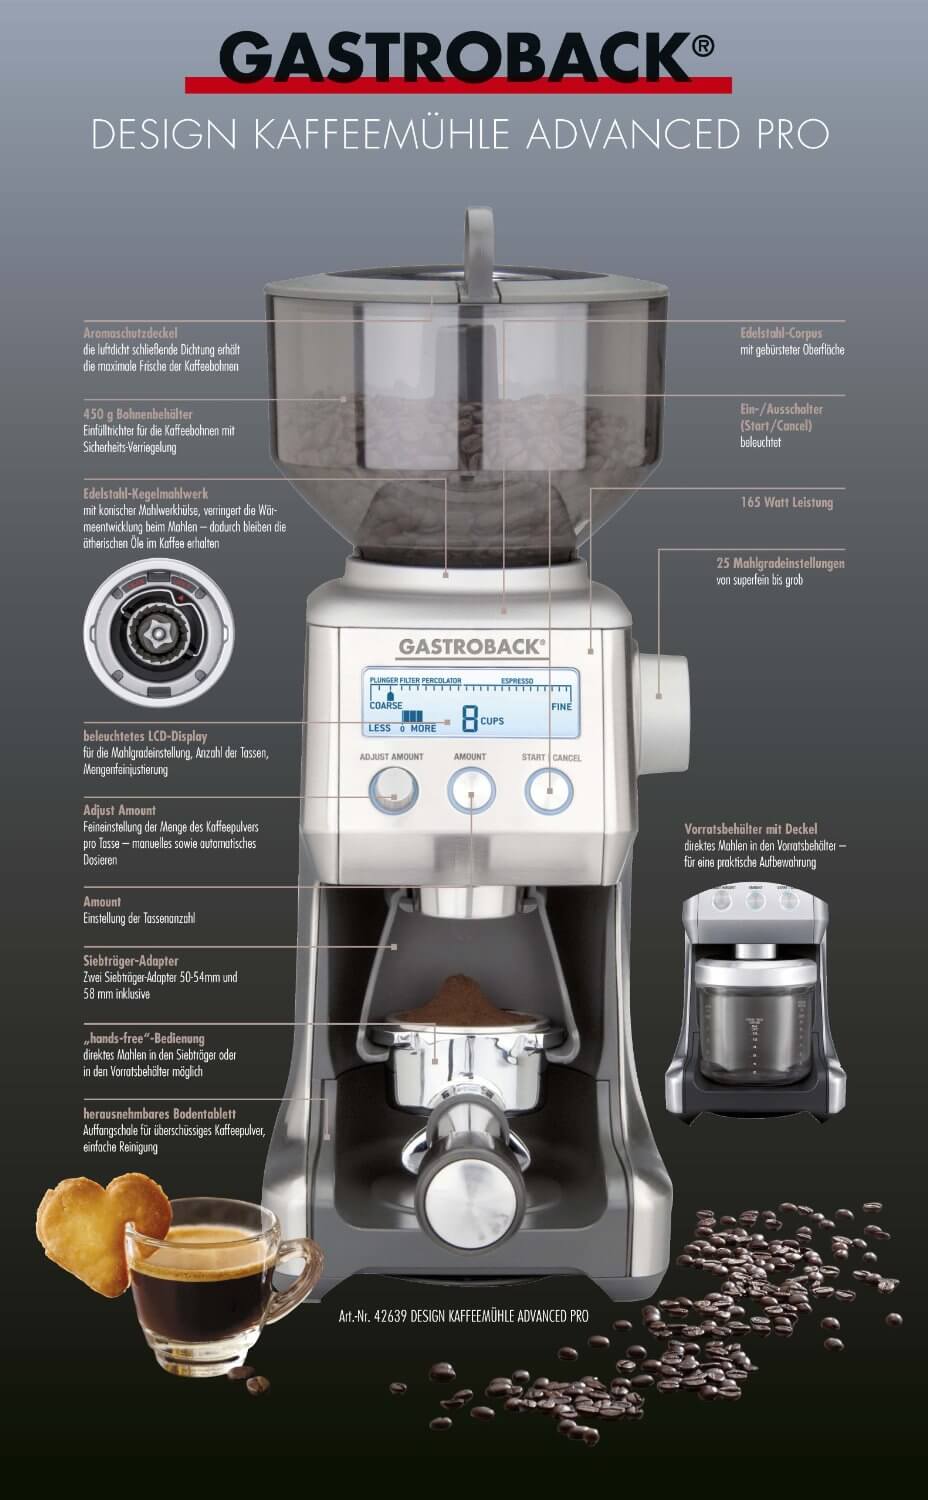 Gastroback Design Kaffeemühle Advanced Pro